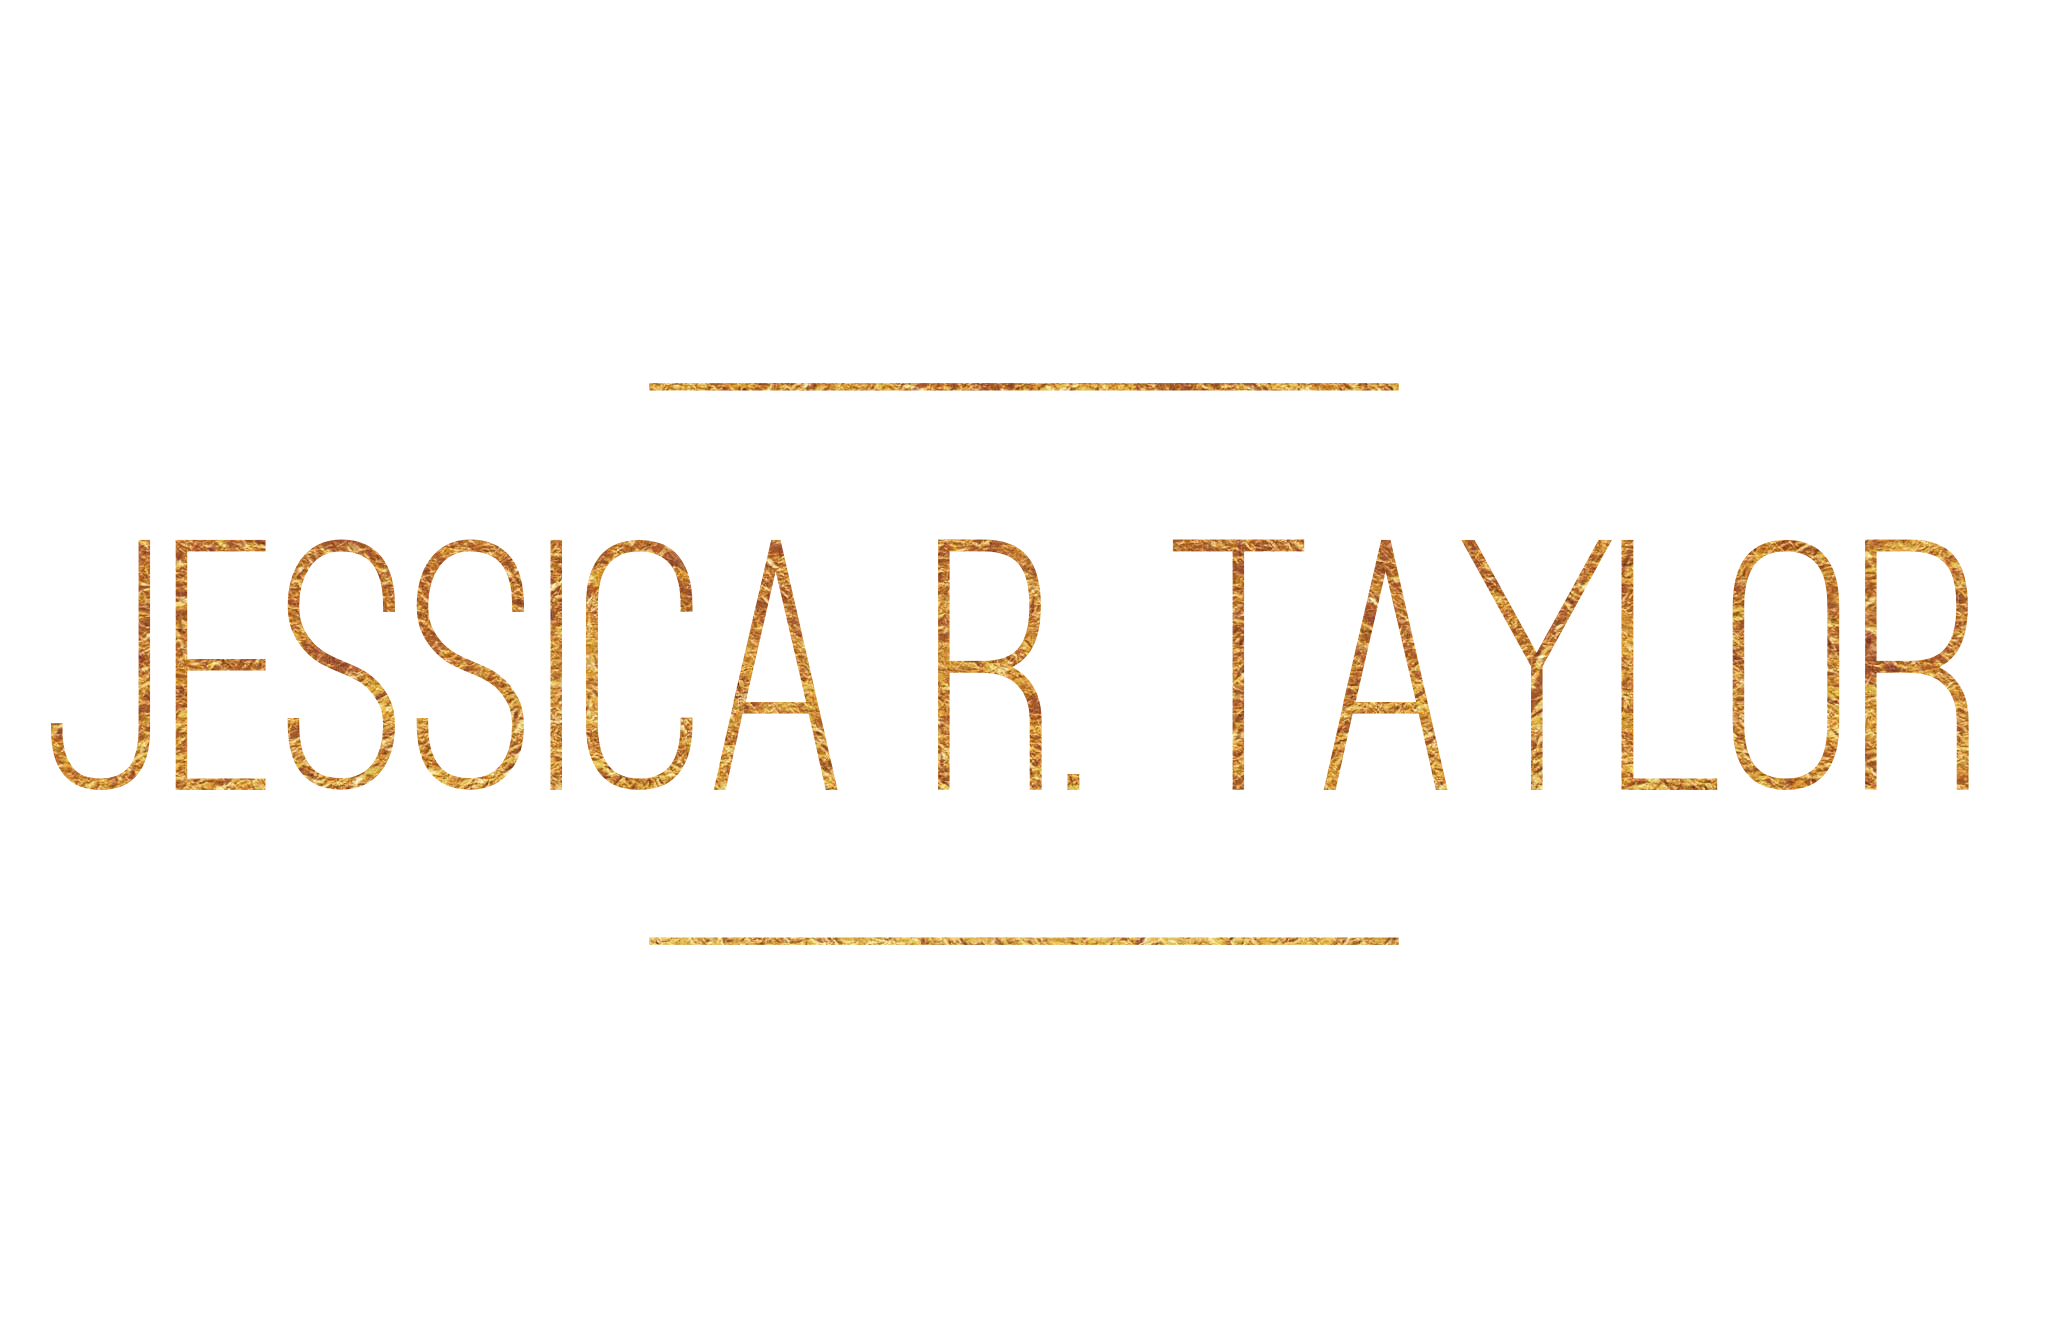 Jessica R. Taylor